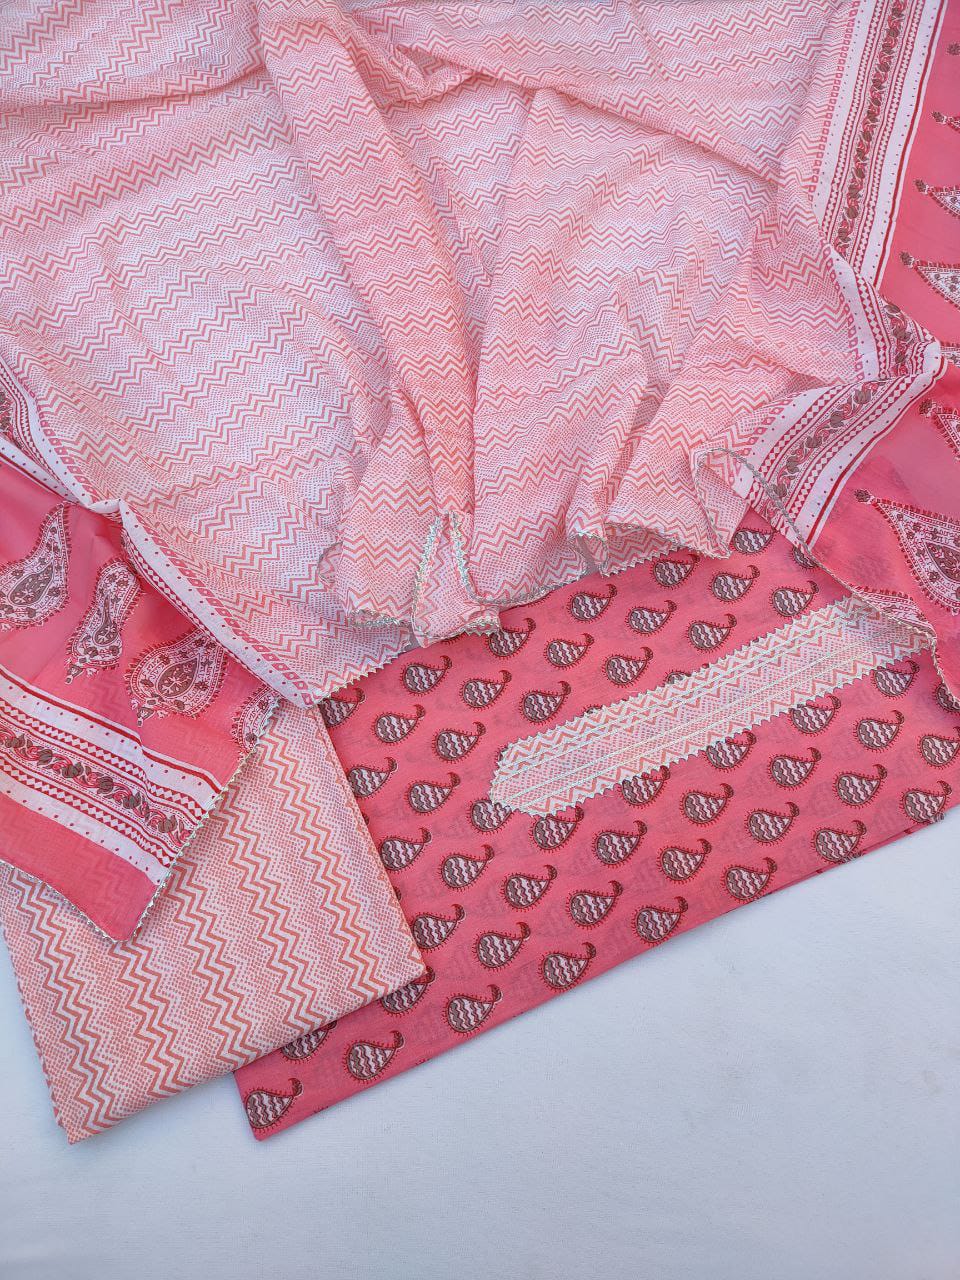 Jaipuri Cotton Hand Block Printed Gota Patti Suit with Cotton Dupatta- JBGP191